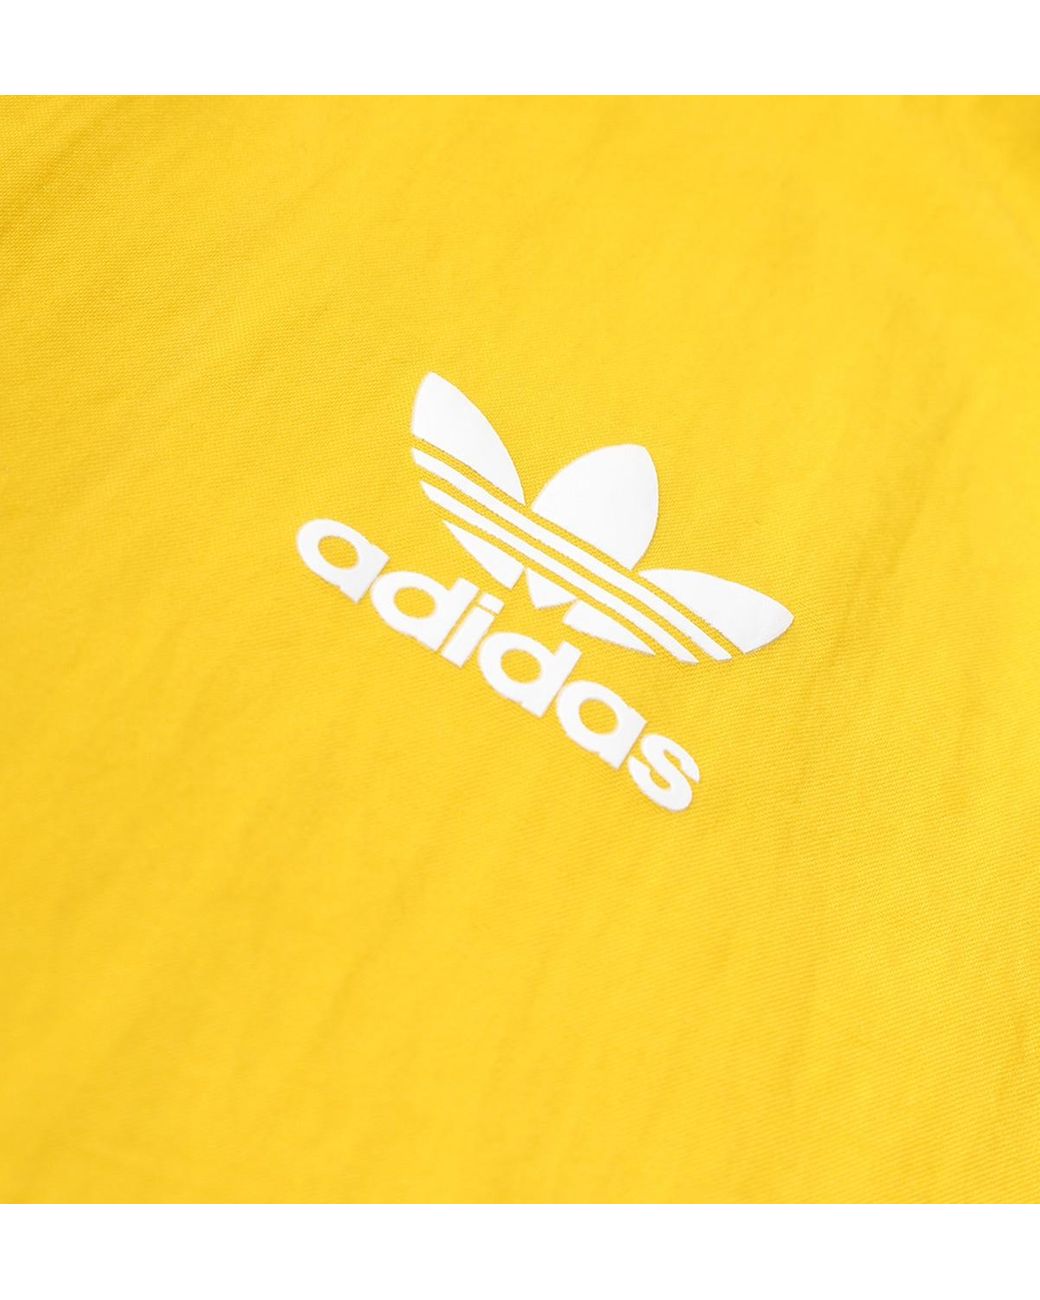 adidas Originals Yellow Sst Windbreaker Jacket for Men | Lyst